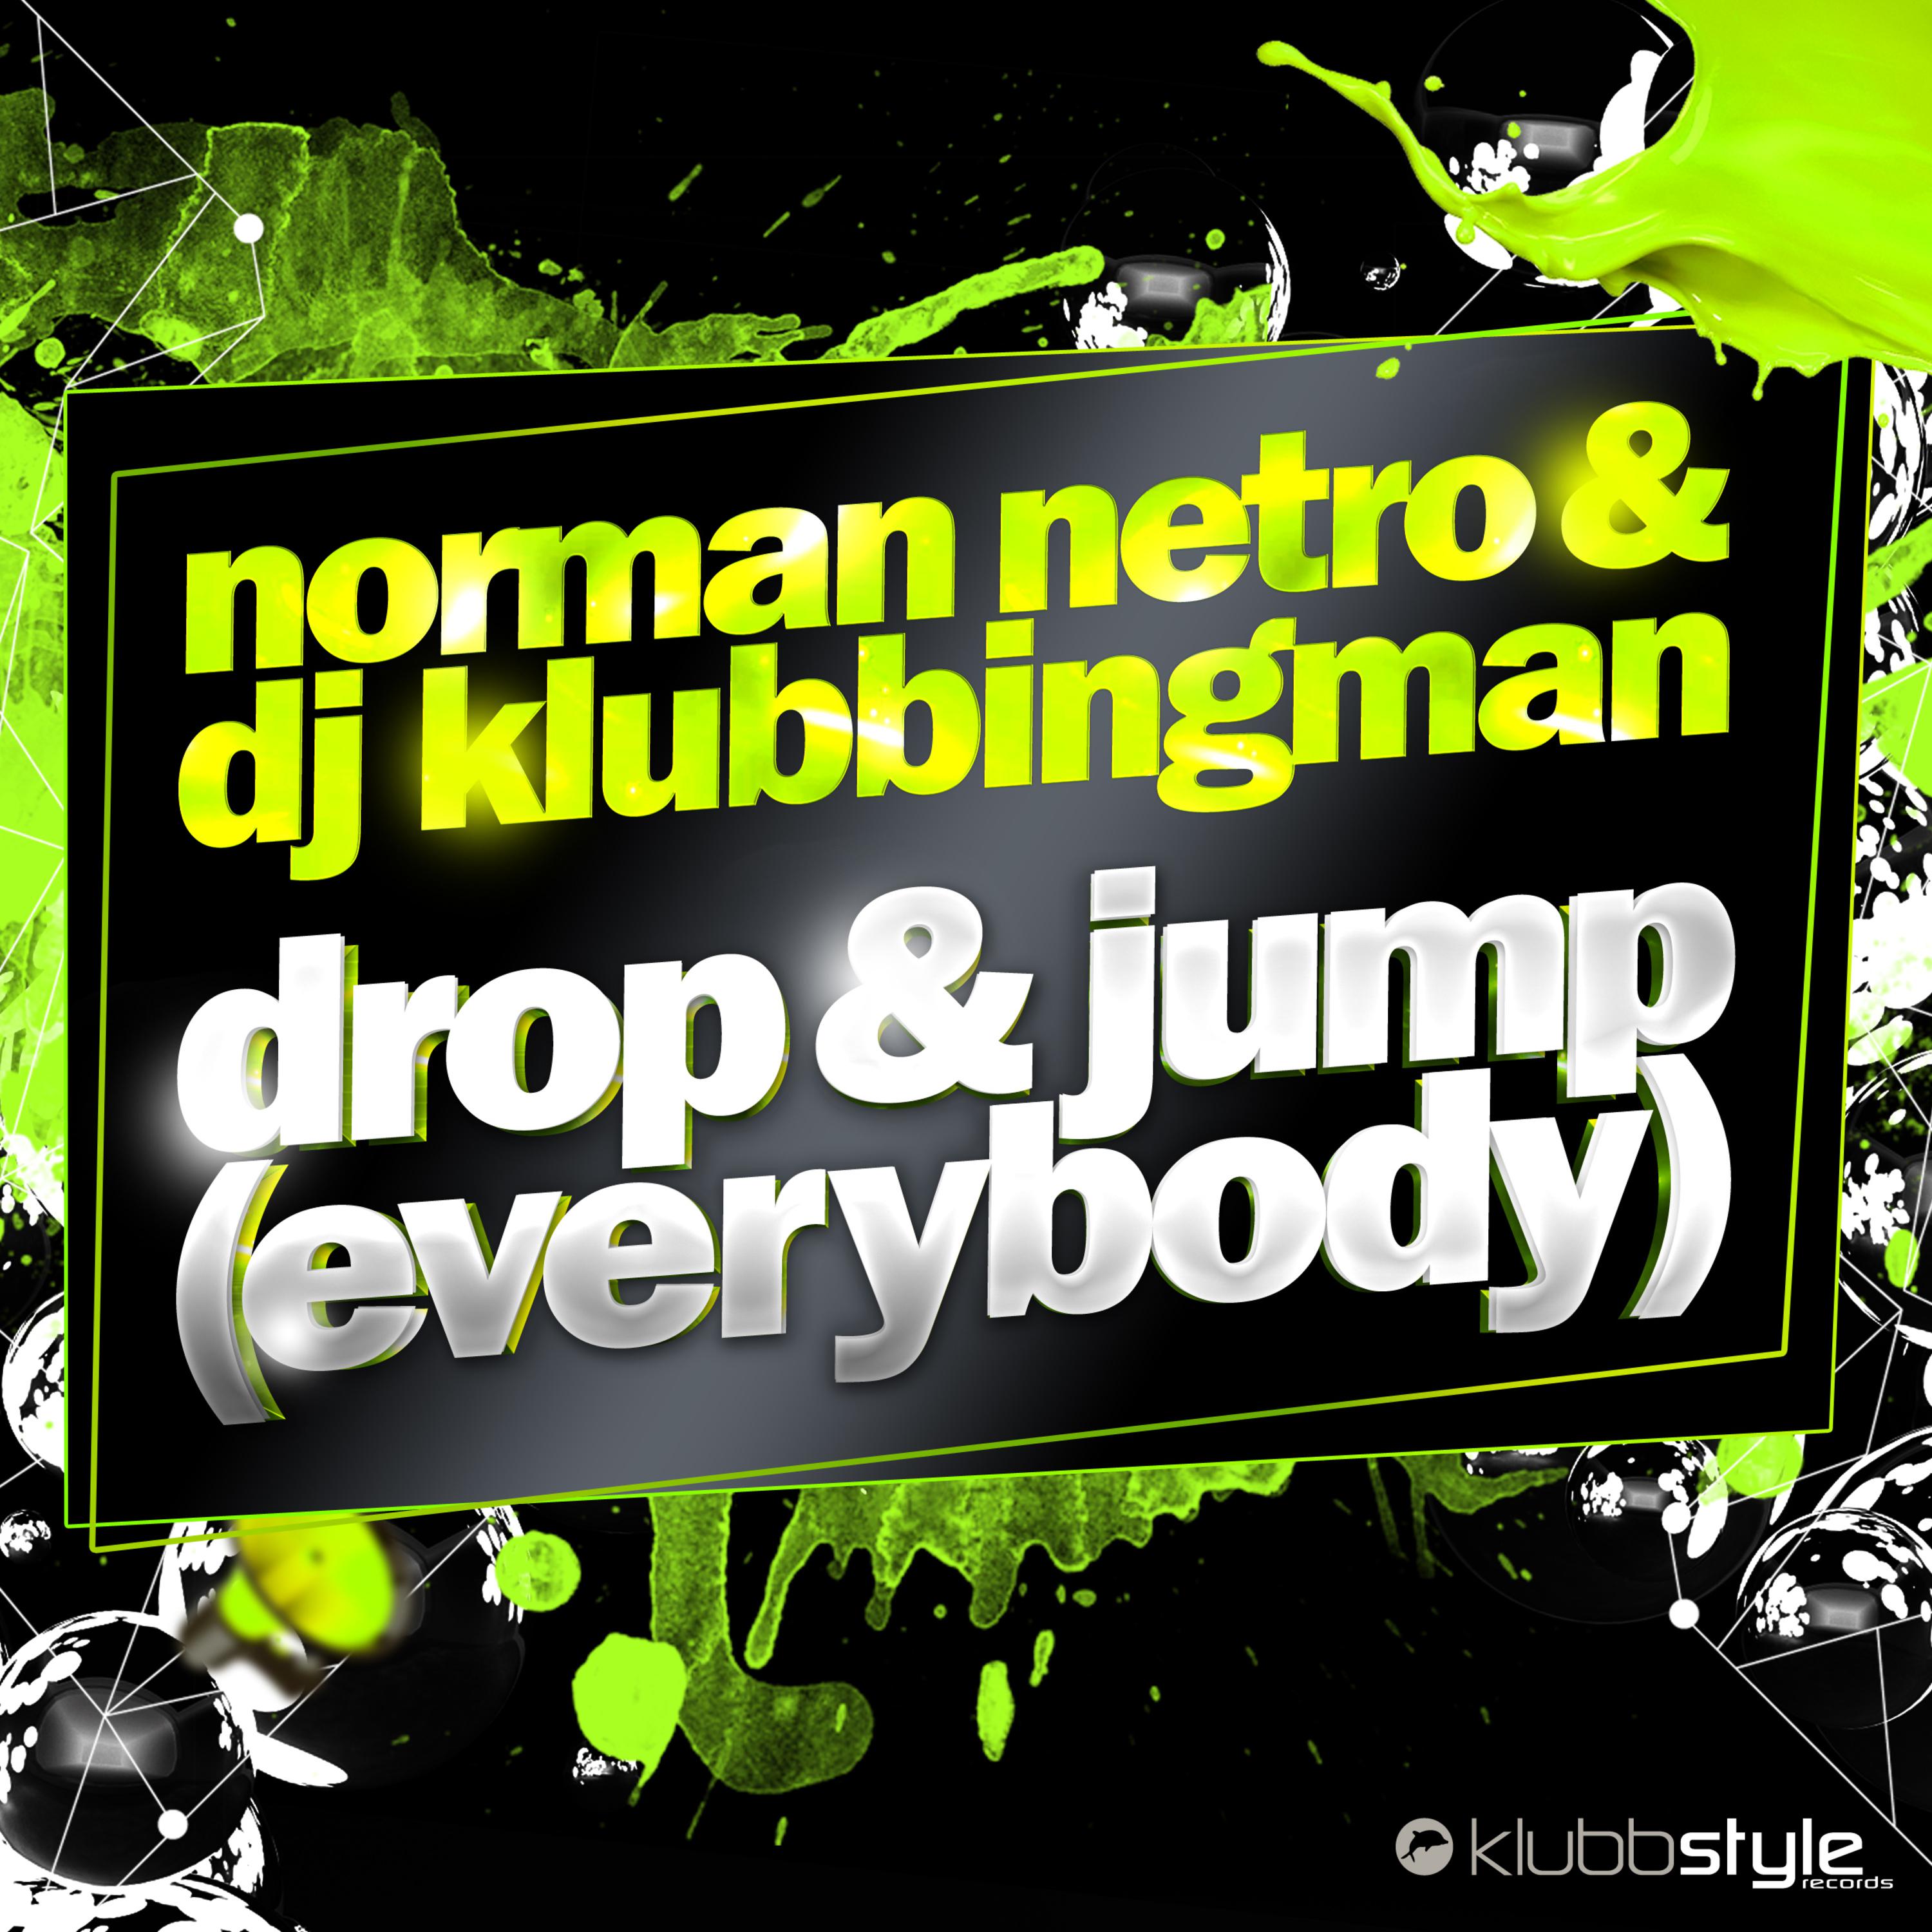 Drop & Jump (Everybody) (Single Edit)